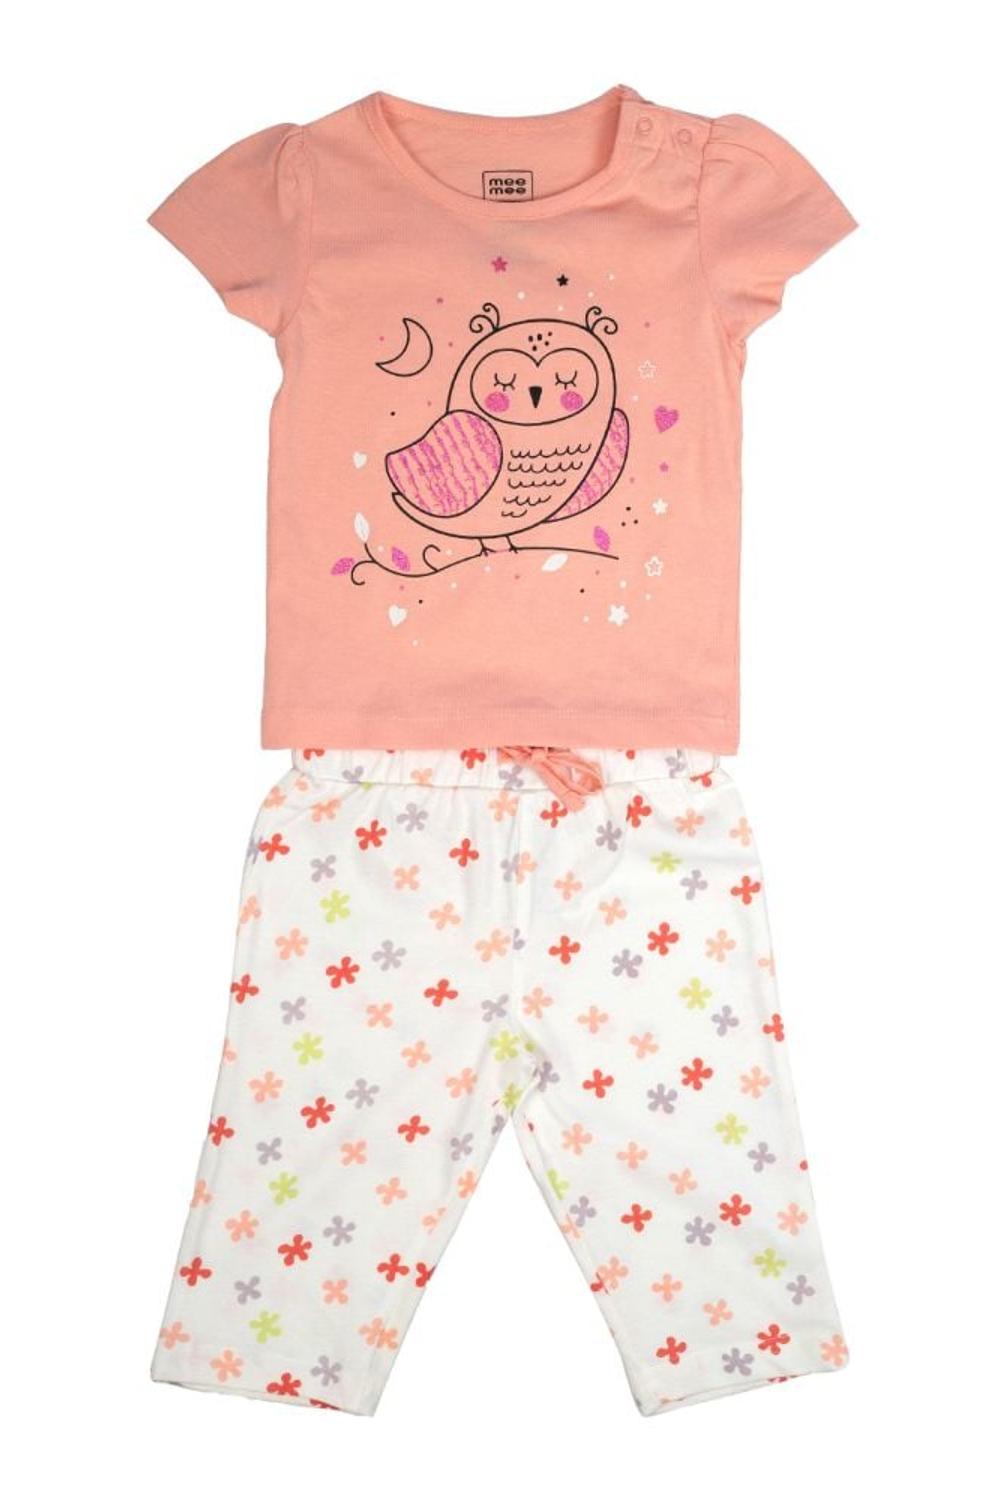 Mee Mee Kids Short Sleeve Owl With Floral Printed Night Suit